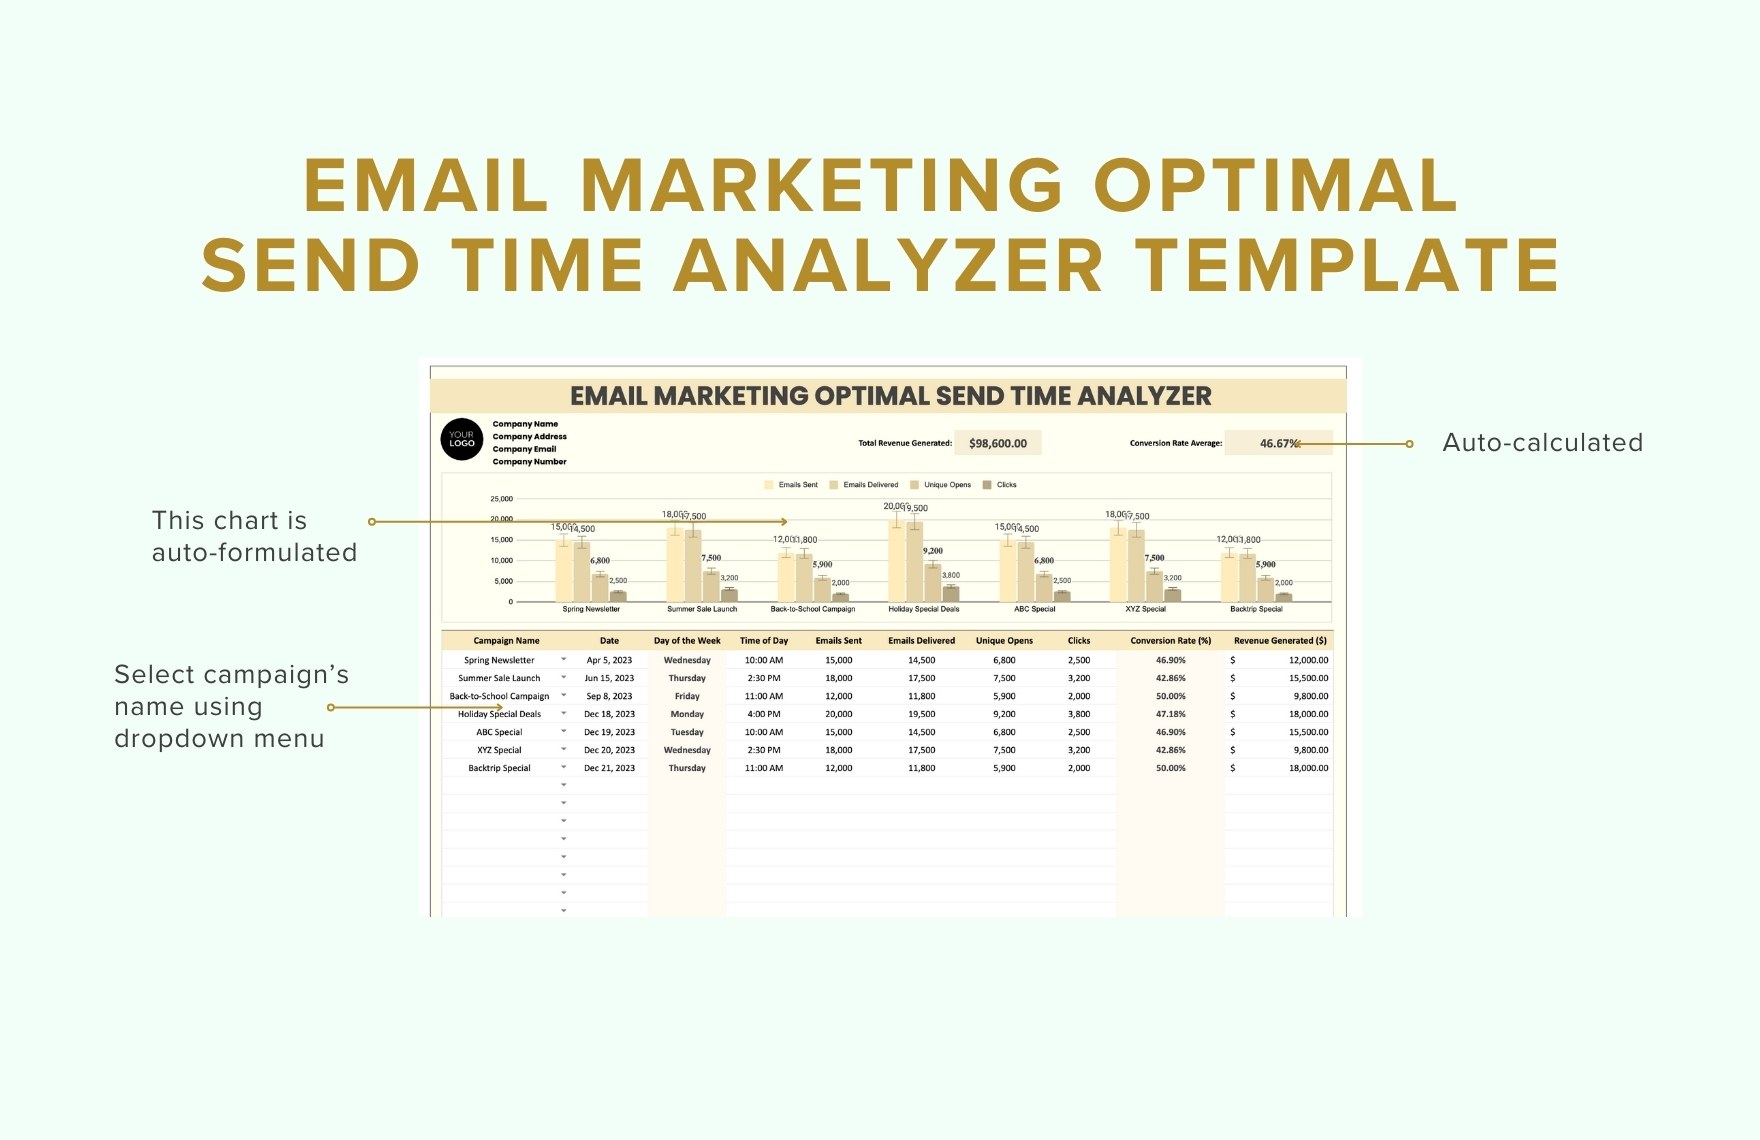 Email Marketing Optimal Send Time Analyzer Template